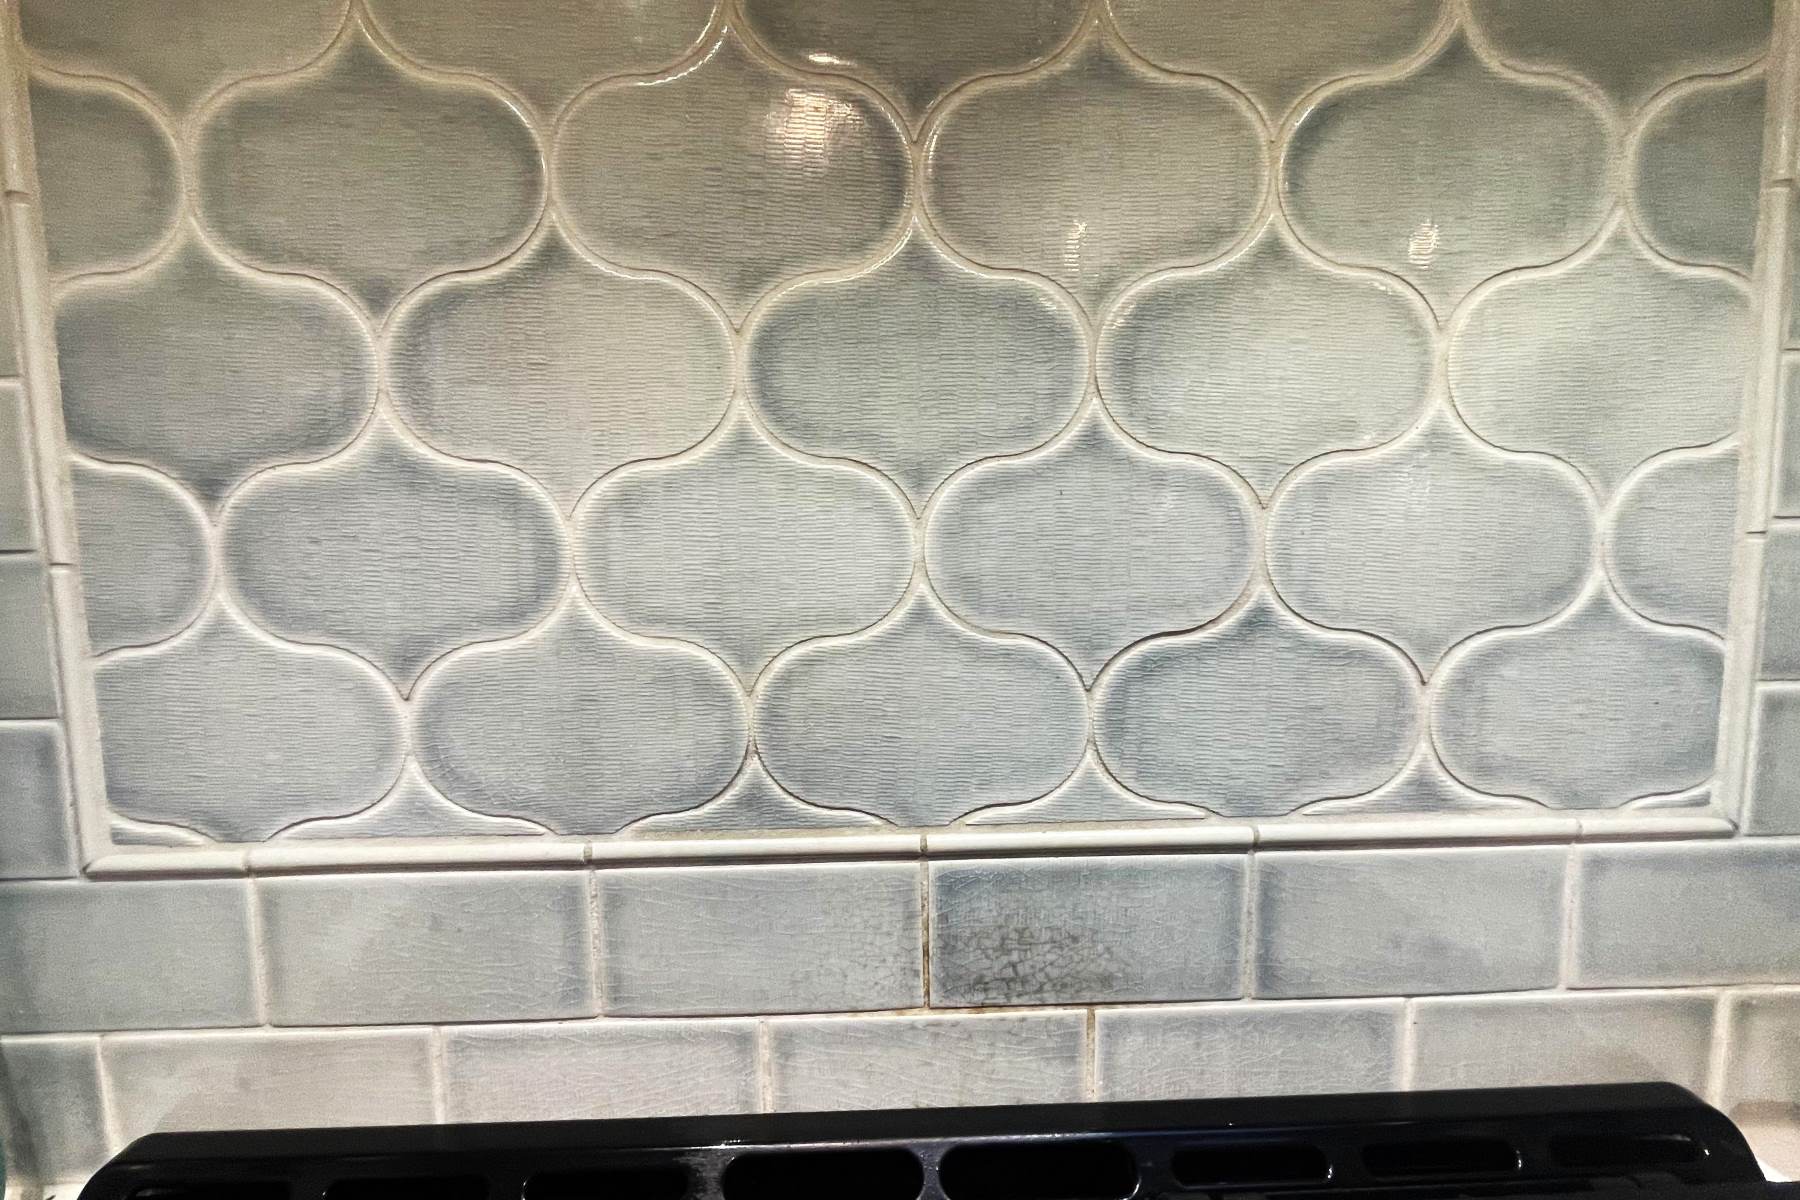 How To Clean Glass Backsplash Tiles